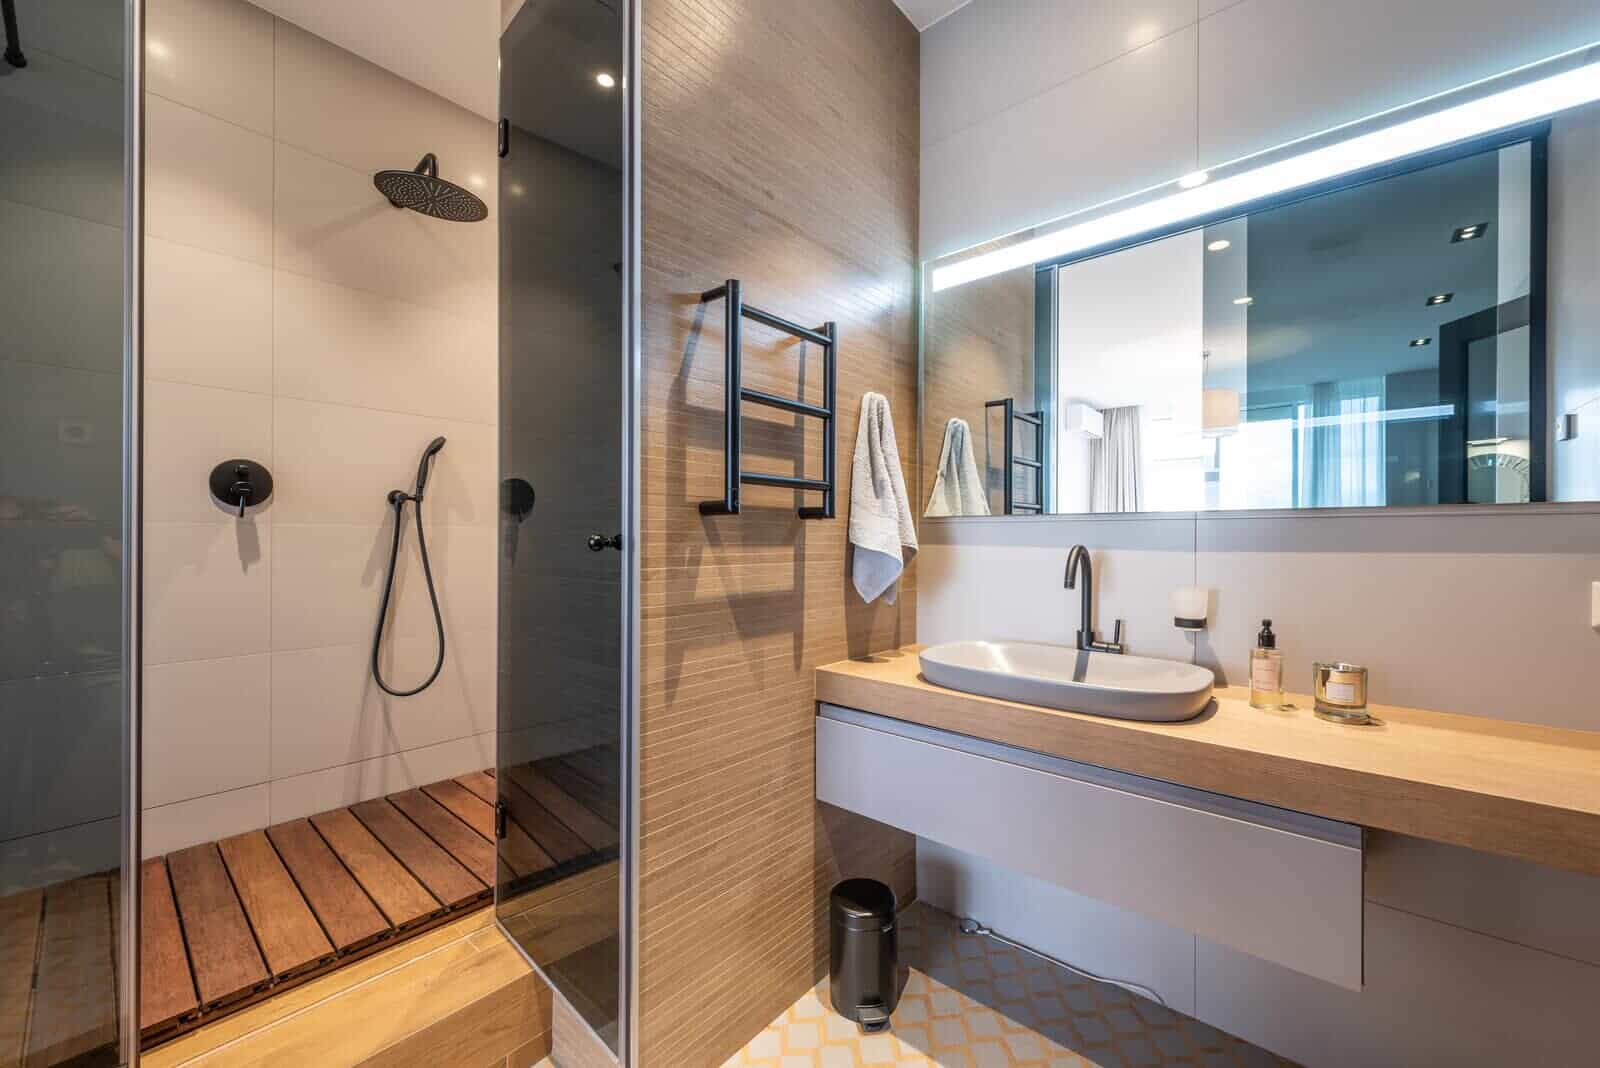 Bathroom design| small condo interior design ideas| condo interior designer| condo solutions| dark colors| walls ceiling| modern display| features|